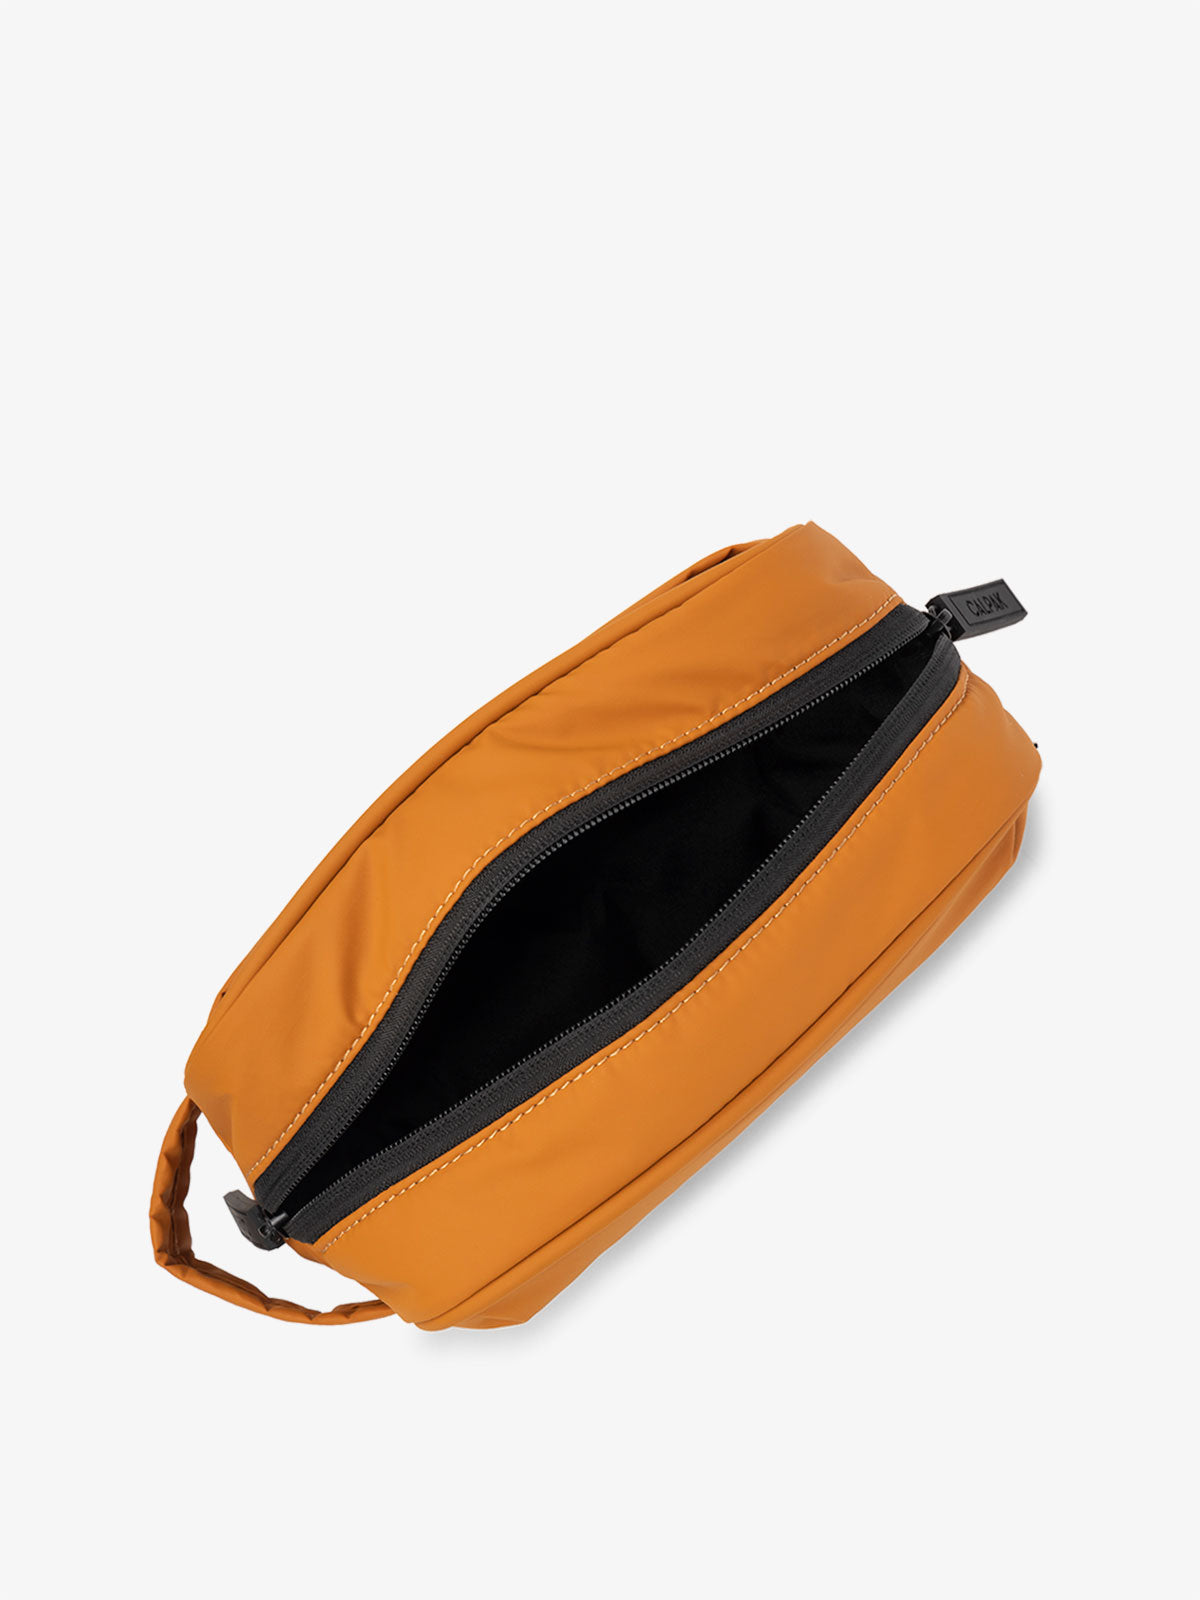 CALPAK Luka Toiletry Bag with zippers in pumpkin